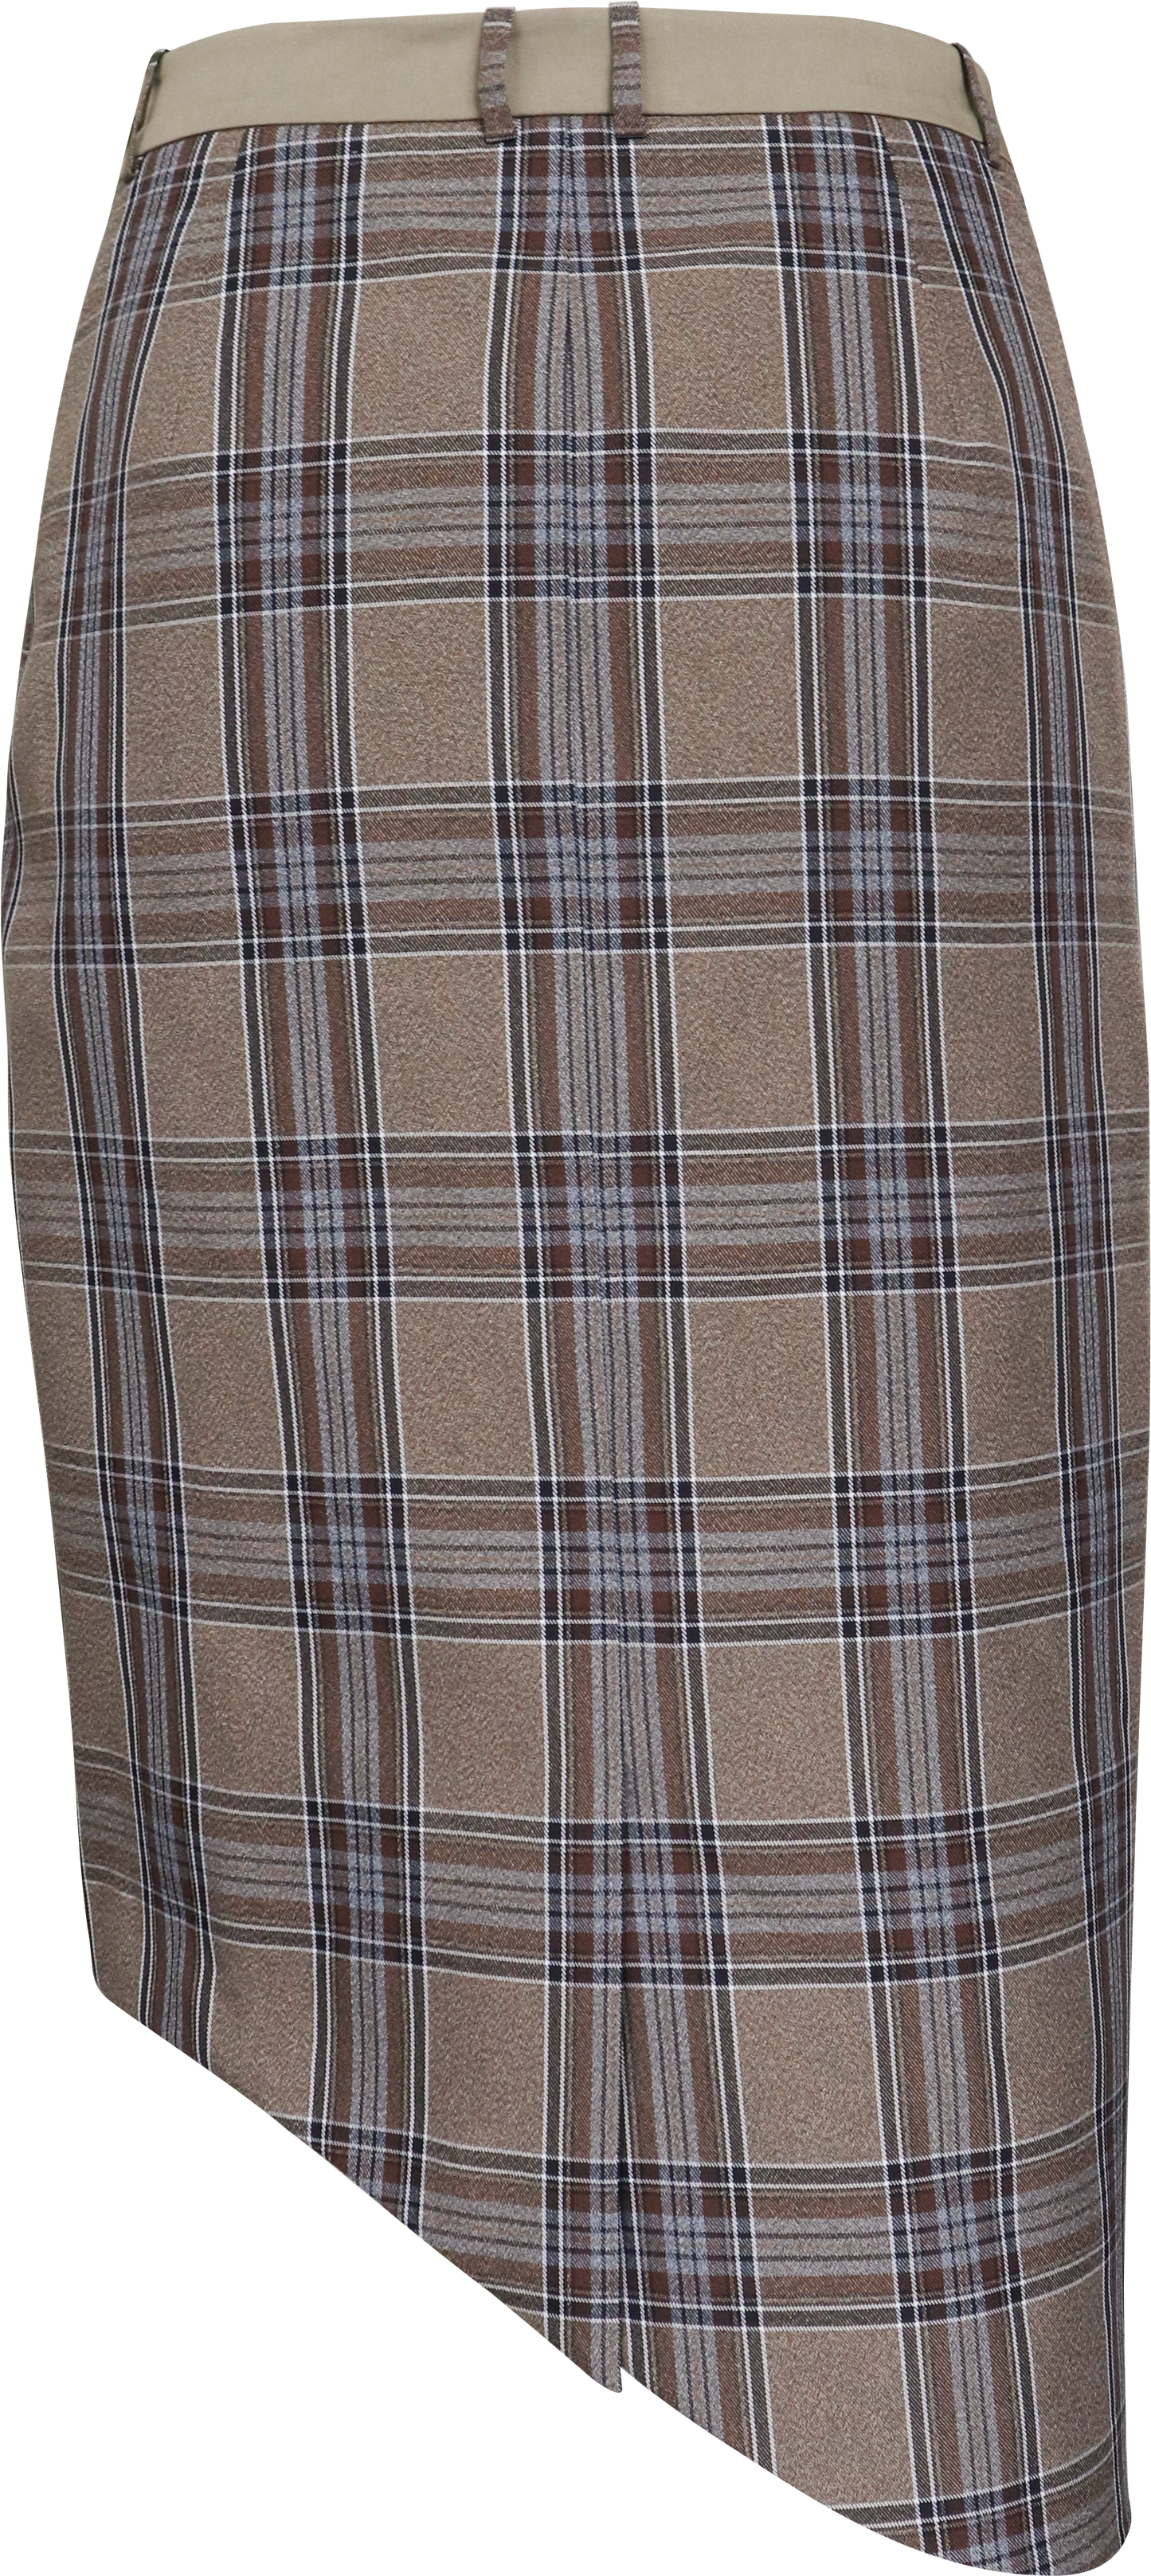 Suit-Like Spliced Half-Skirt